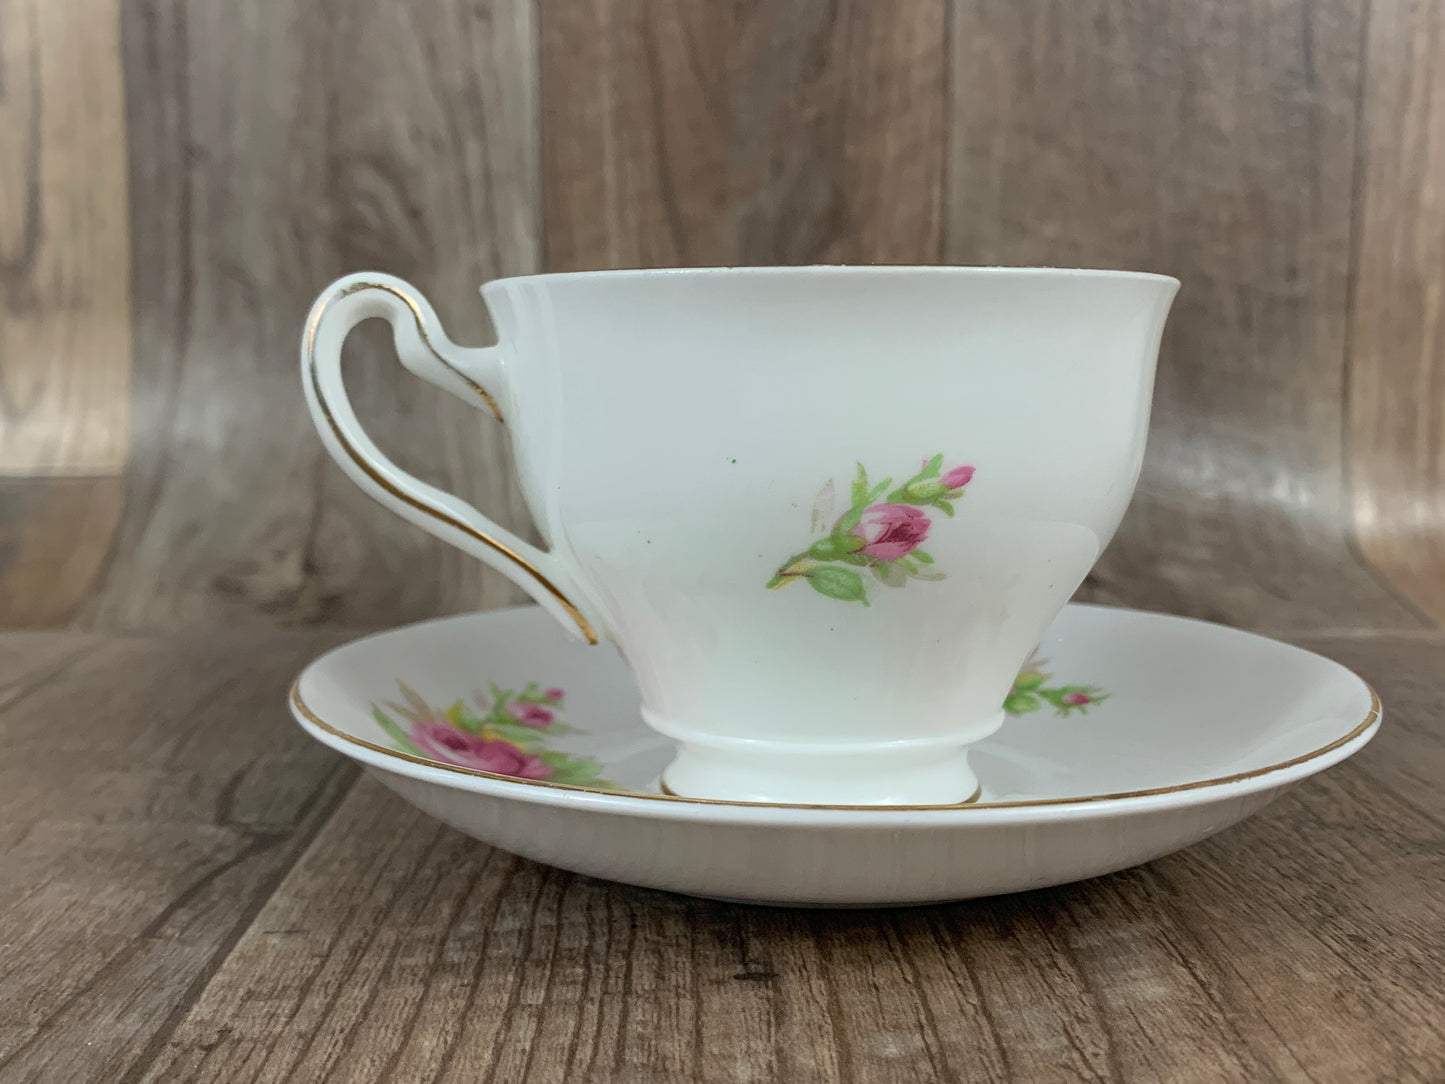 Pink Floral Vintage Teacup and Saucer Made in England Bone China Vintage Tea Cup